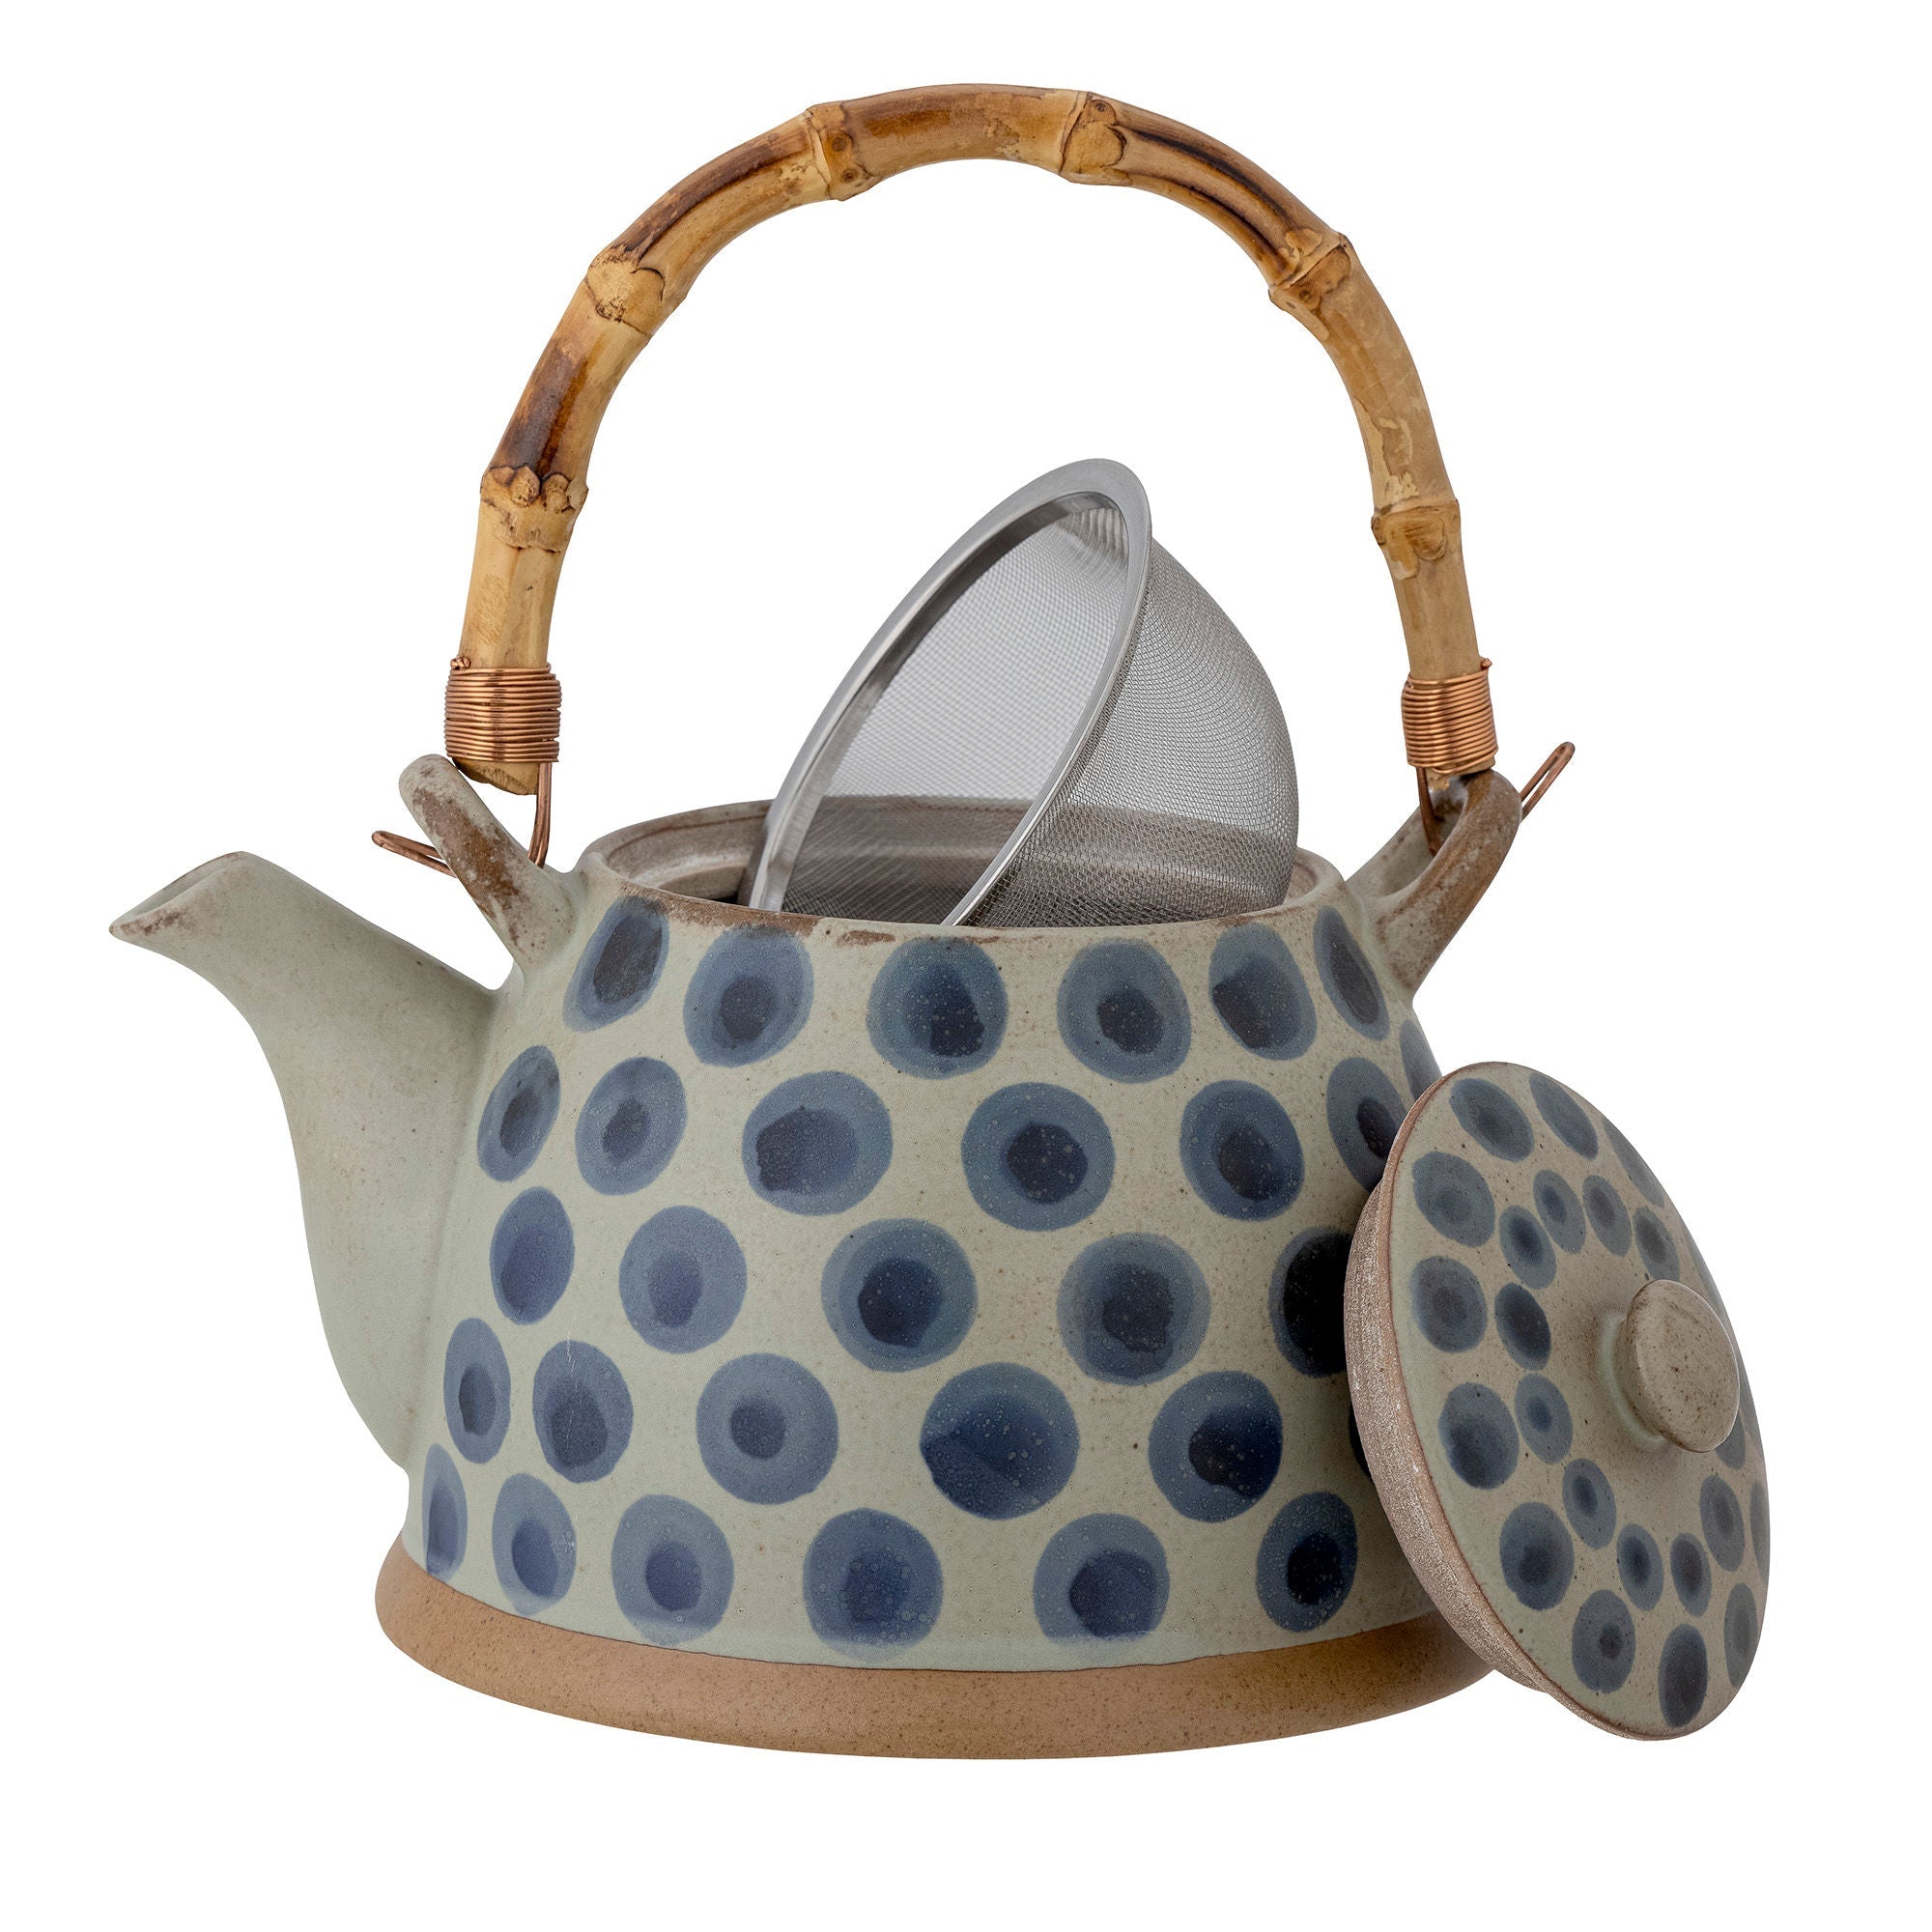 Bloomingville Tinni Teapot, blå, stentøj